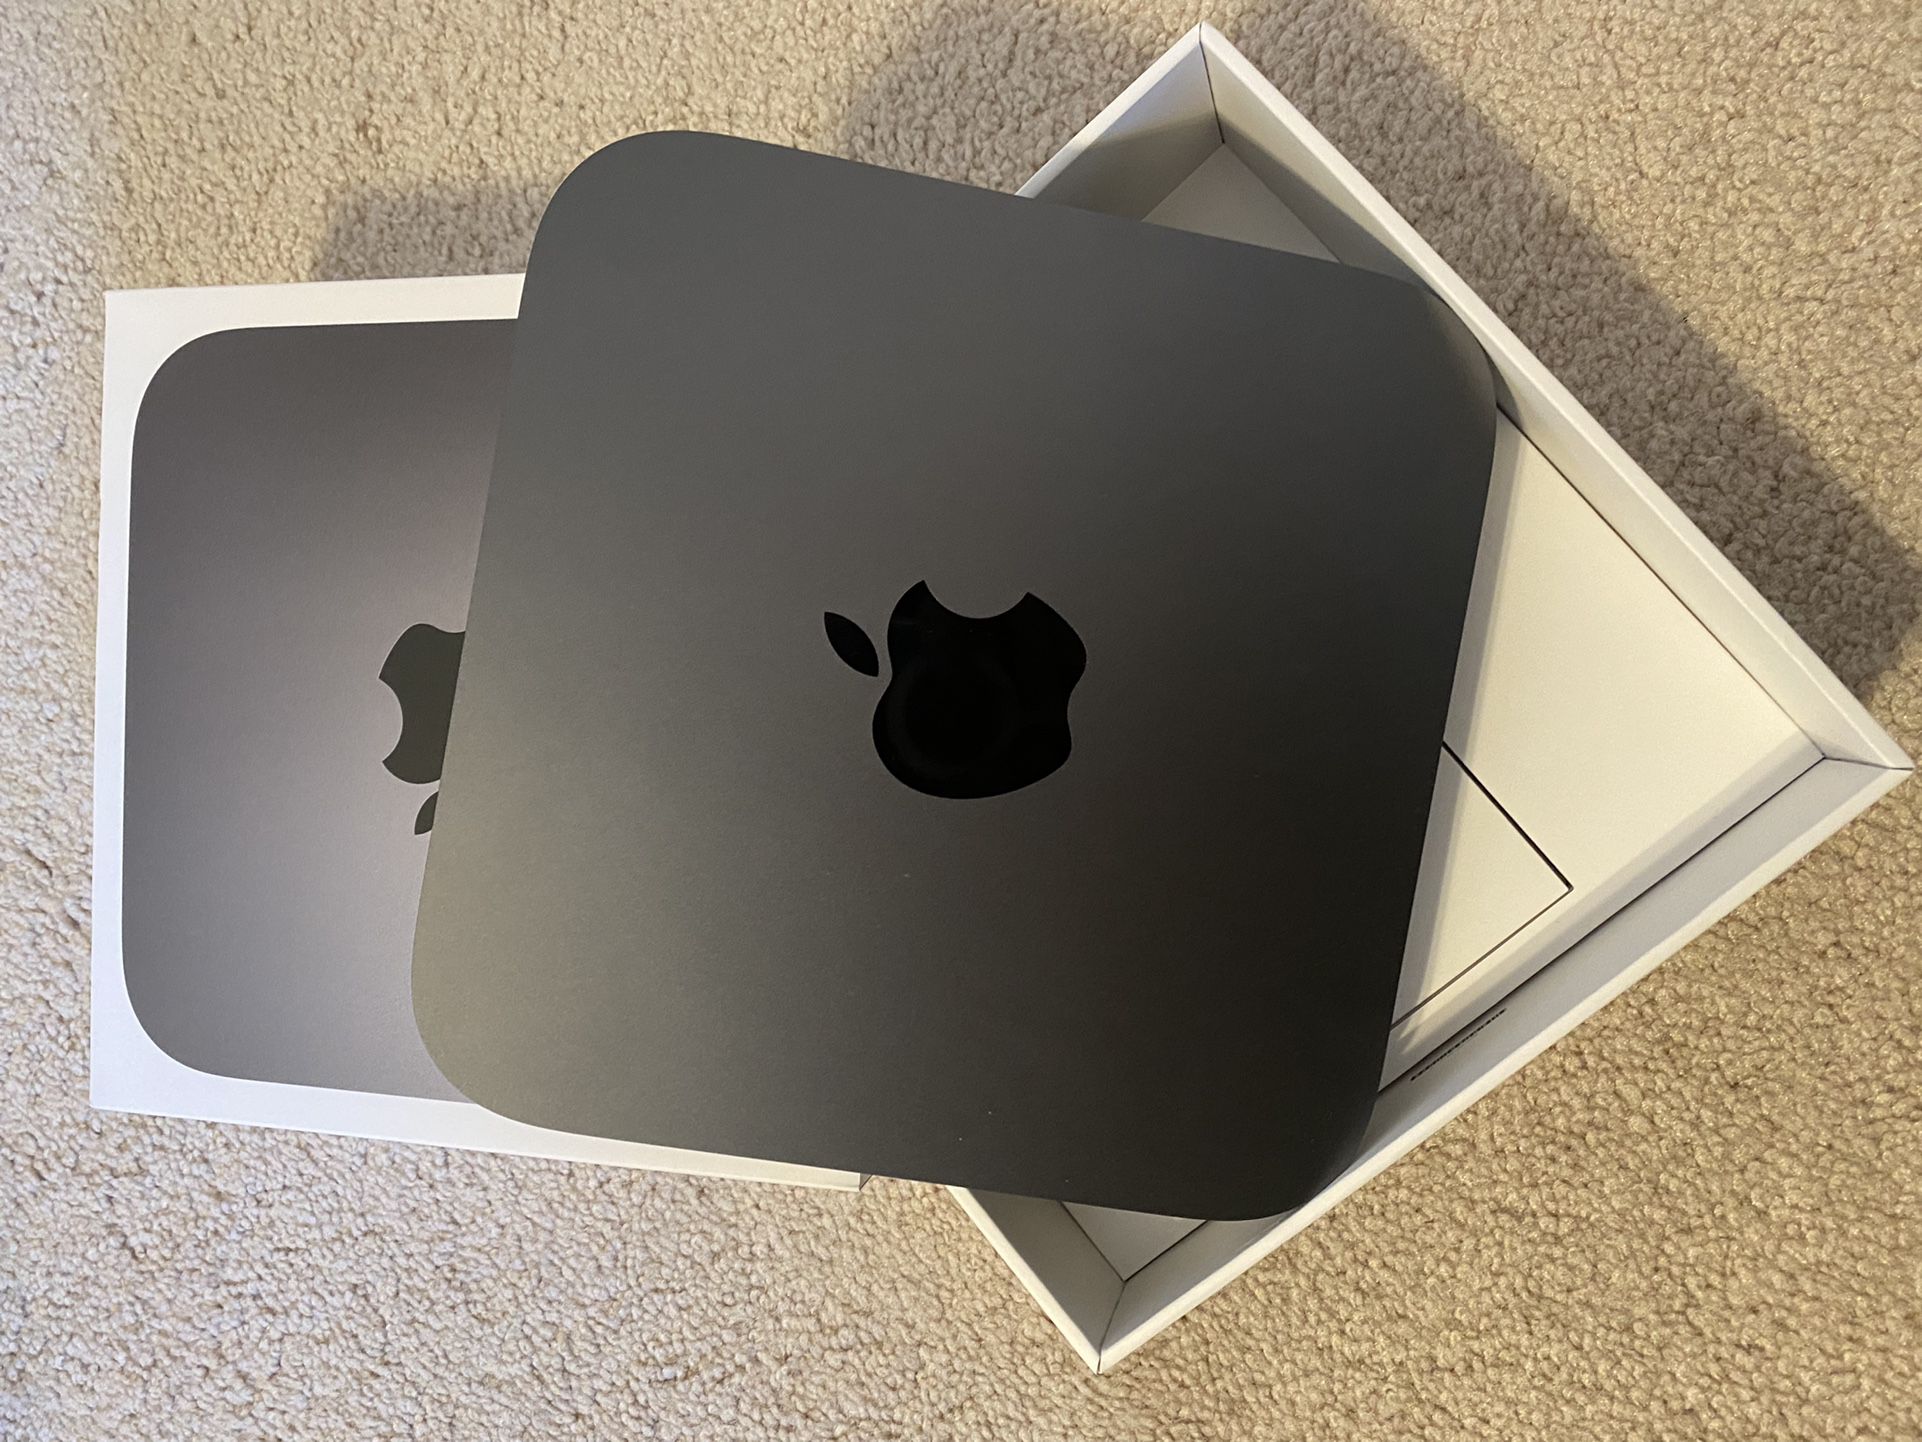 Mac Mini With Warranty Until July 2022